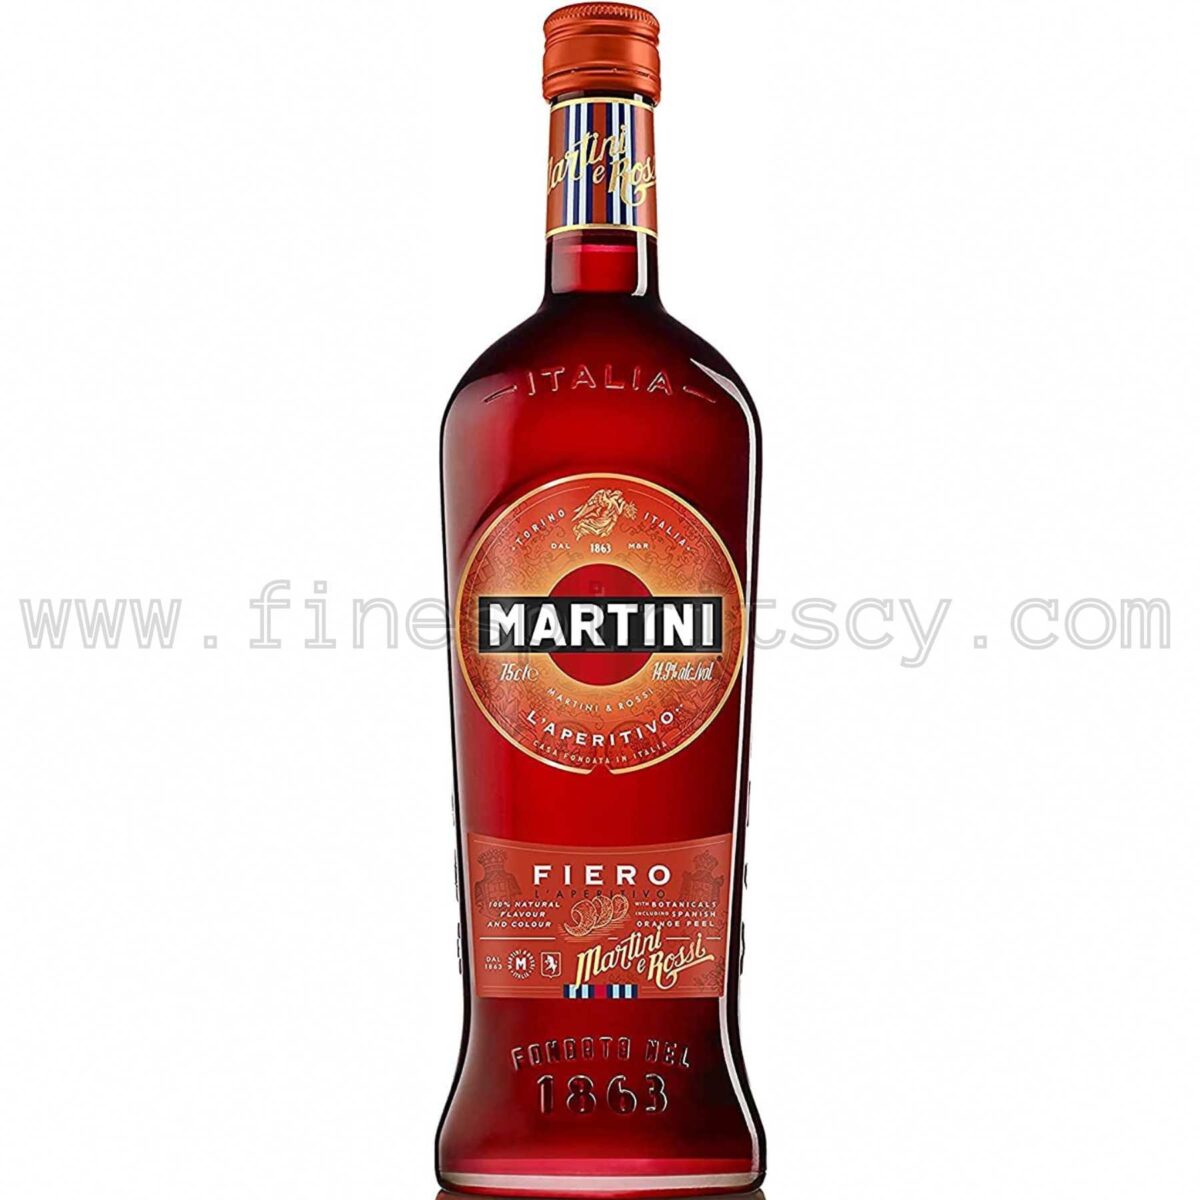 Martini Fiero Vermouth CY 750ml 75cl 0.75L Online Cyprus Price Fine Spirits